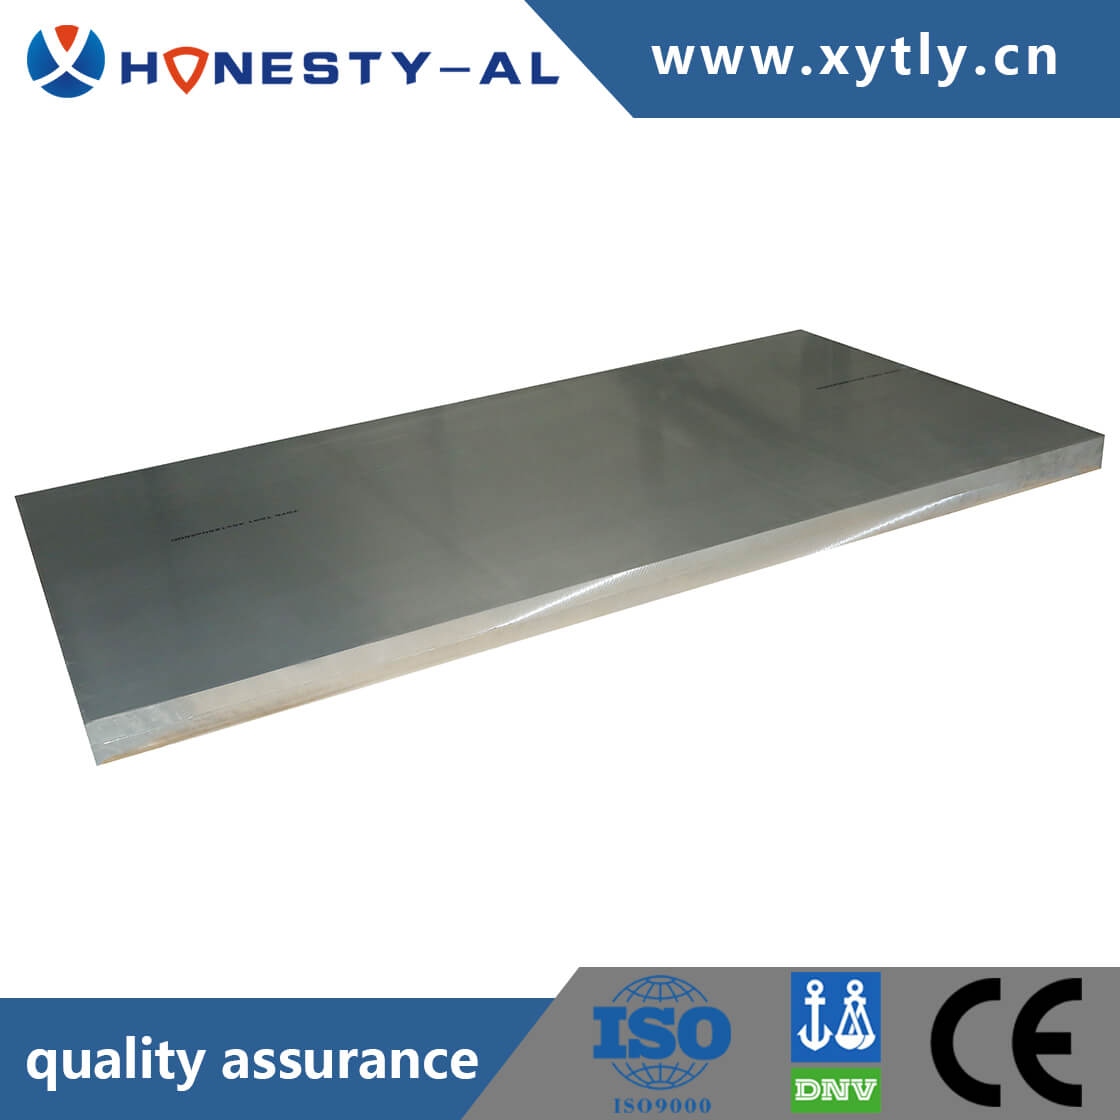 More AL Material-Aluminum oxide plate